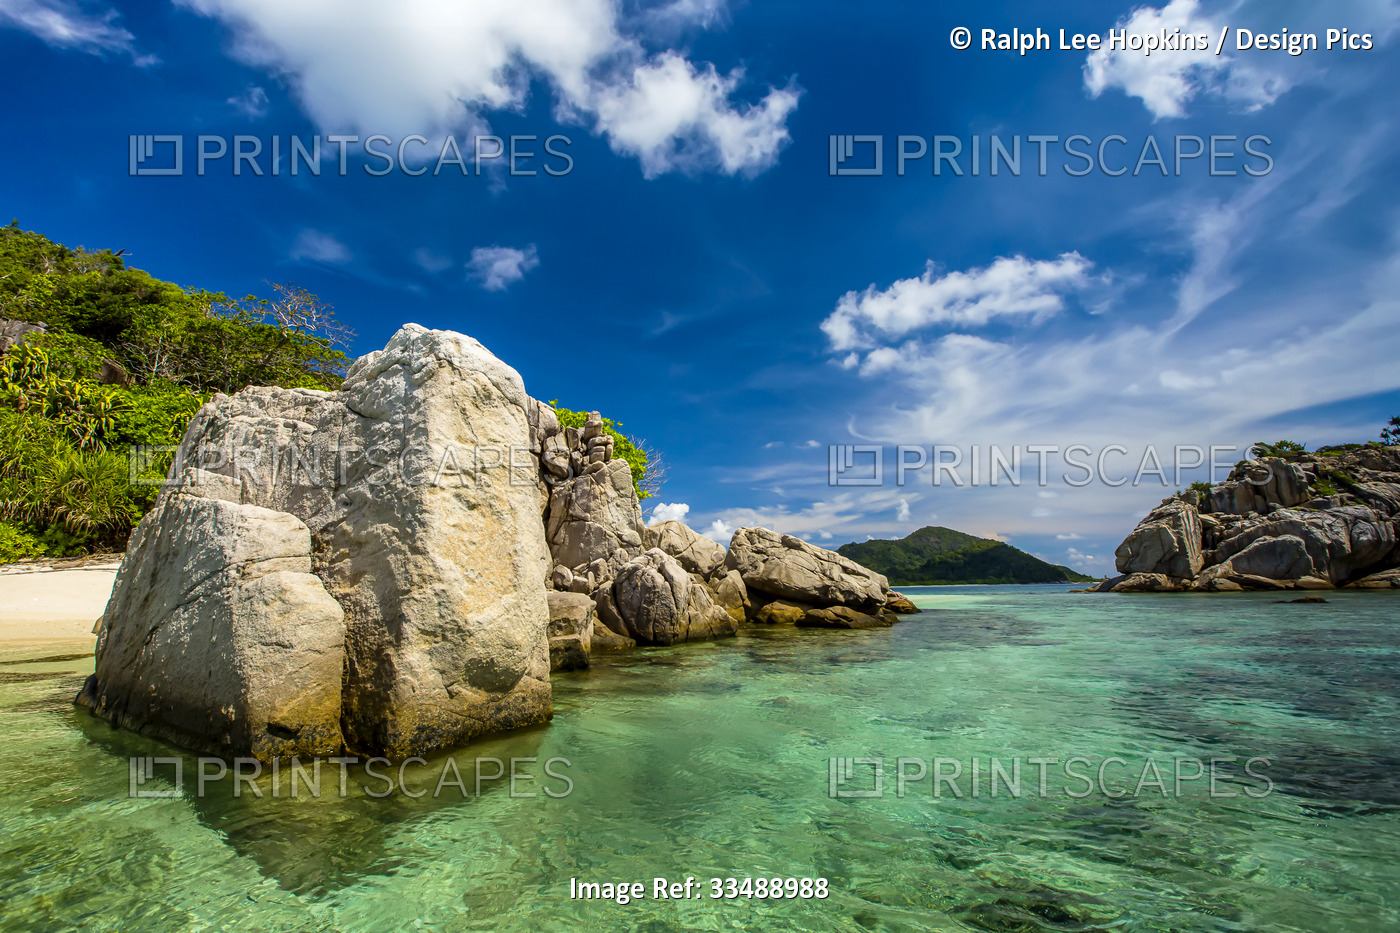 Granite rock formations define a tropical beach.